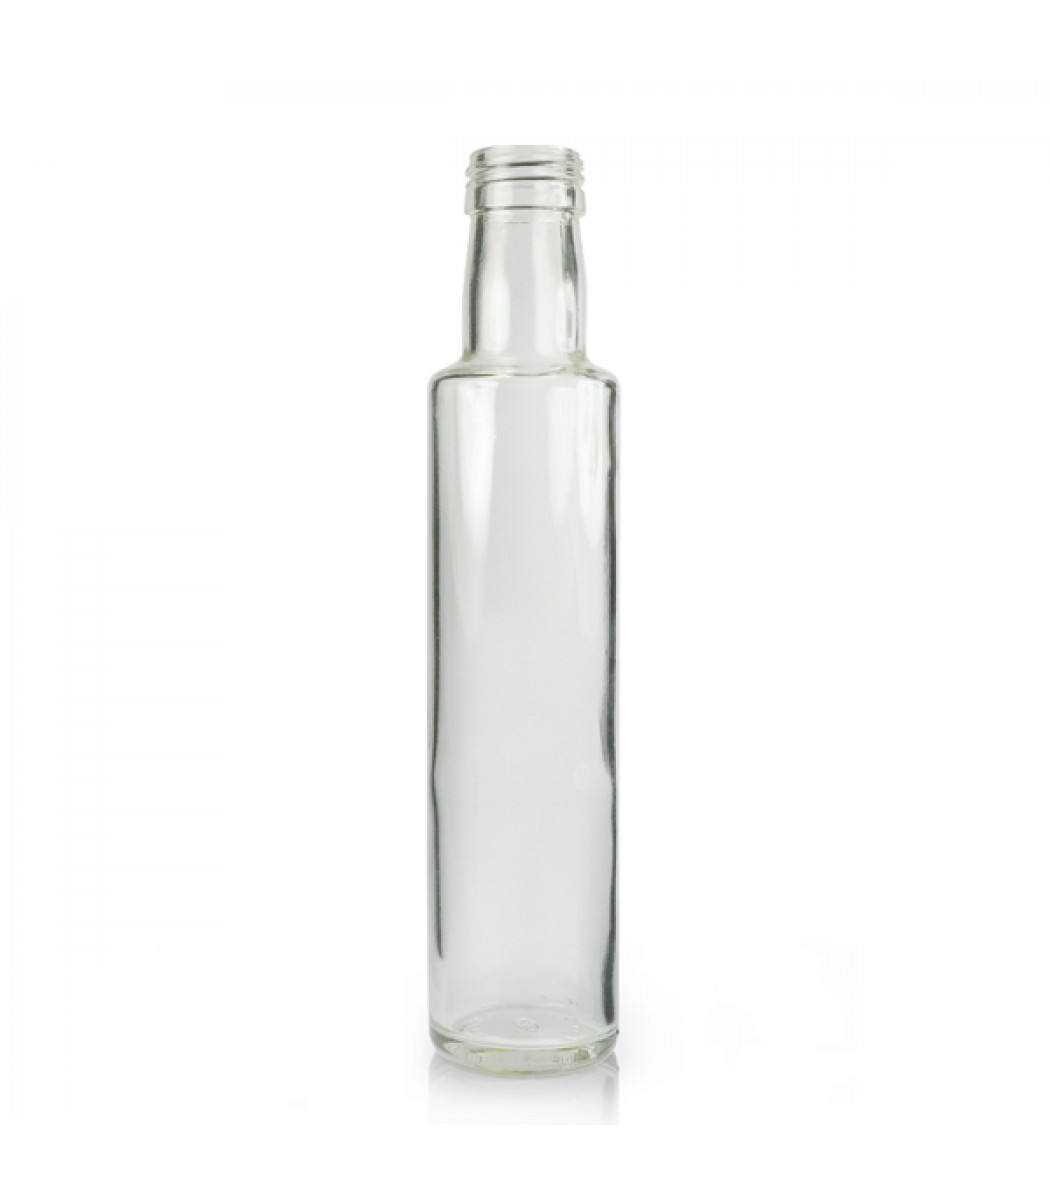 32oz (960ml) Flint (Clear) Glass Oil Bottle with Cork Finish